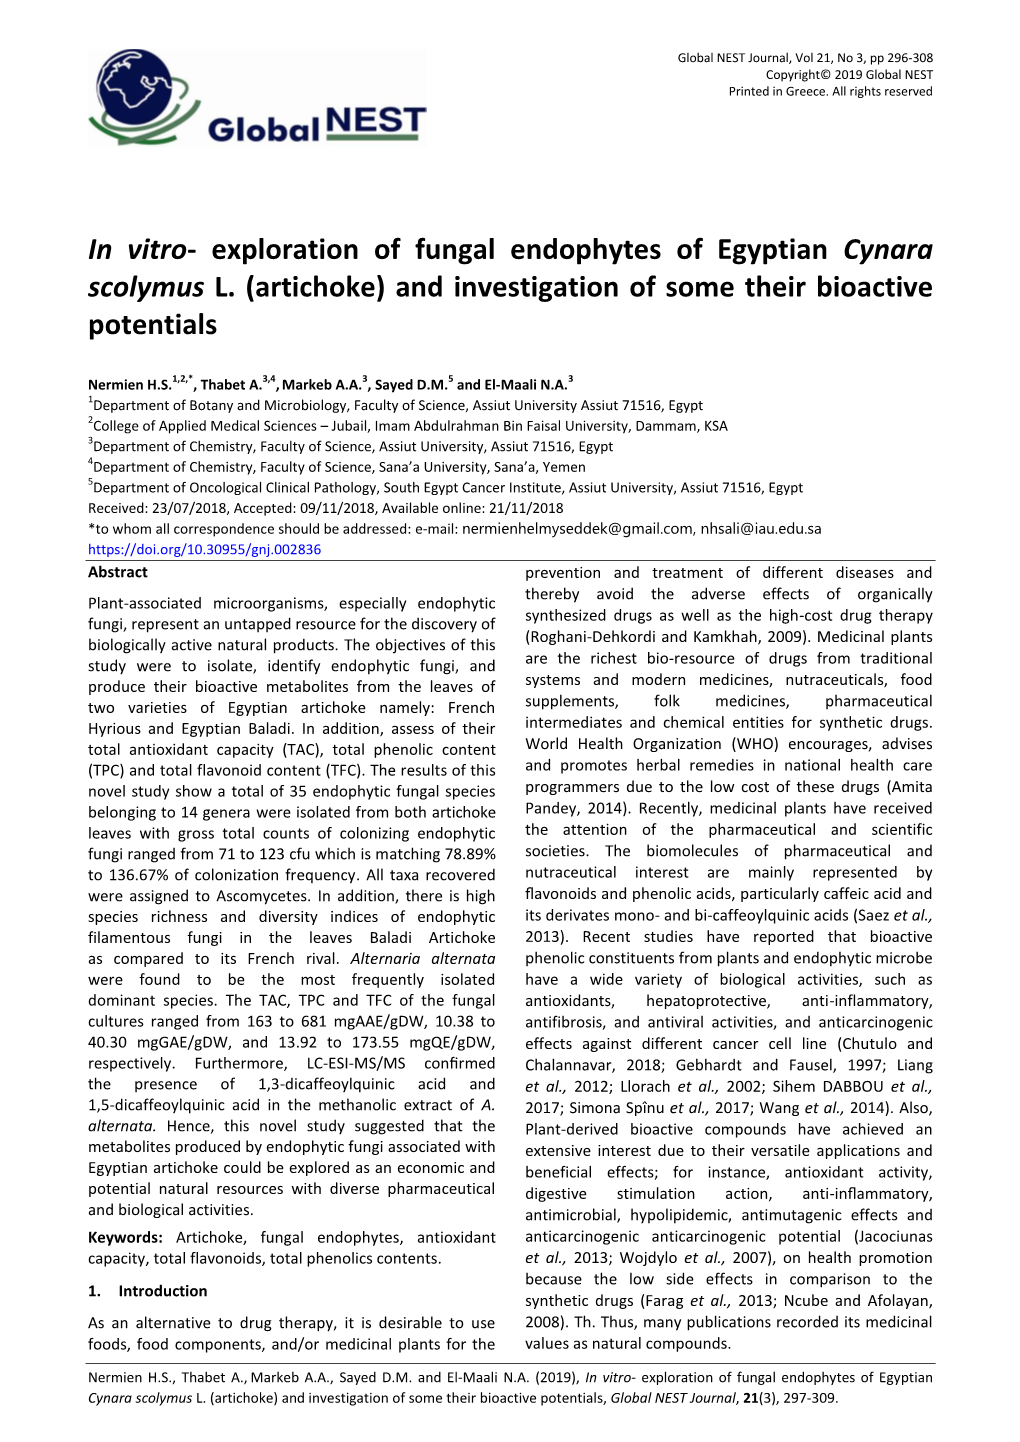 In Vitro- Exploration of Fungal Endophytes of Egyptian Cynara Scolymus L